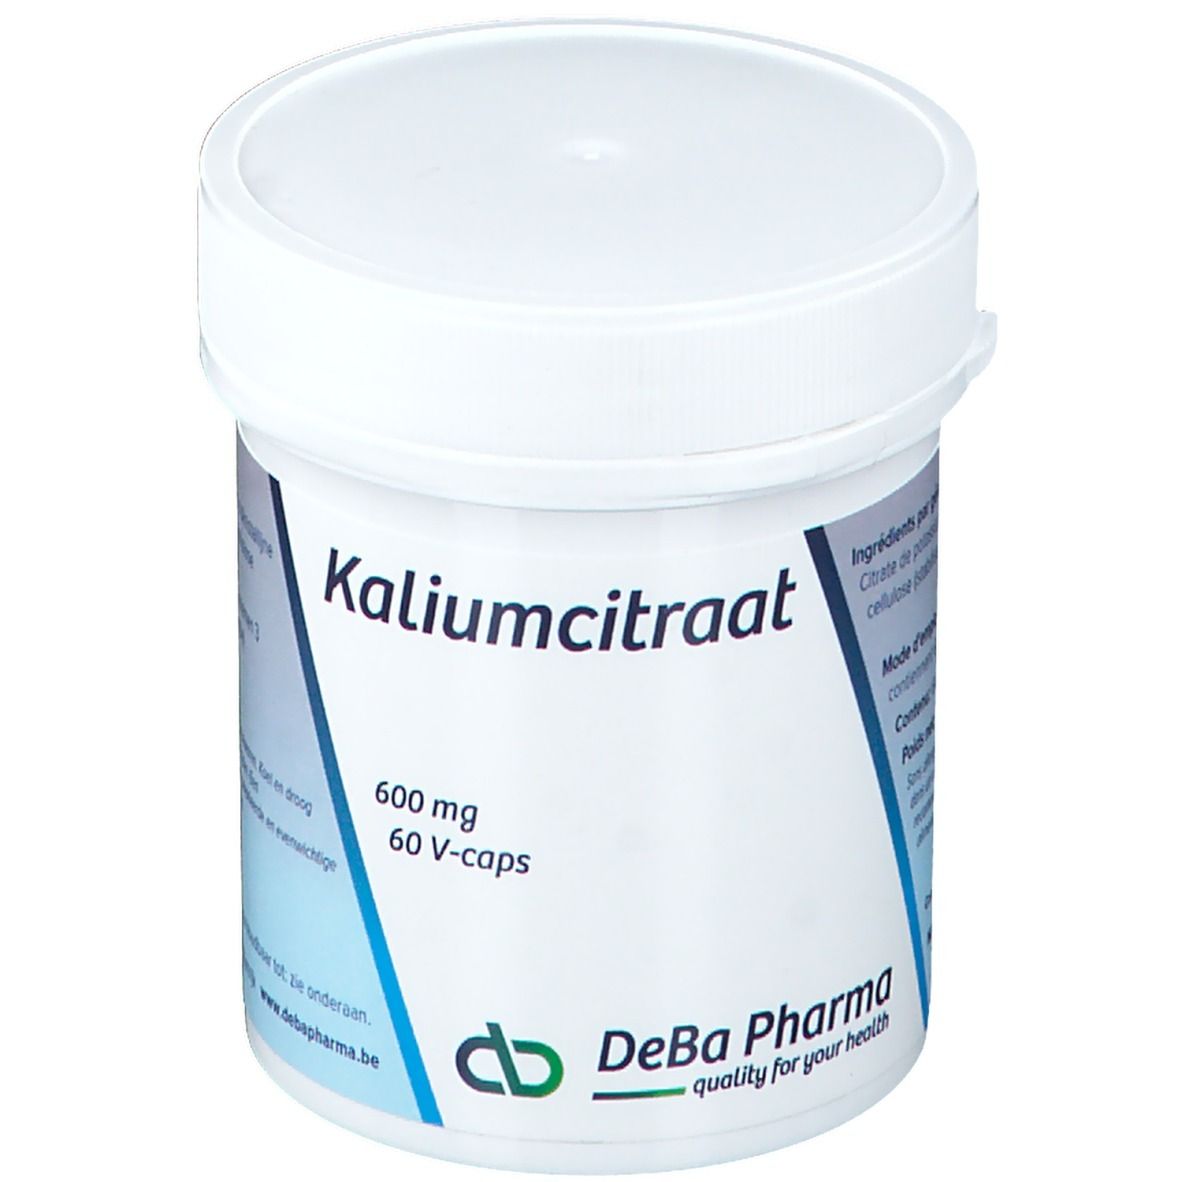 DeBa Pharma Kaliumcitraat 600 mg